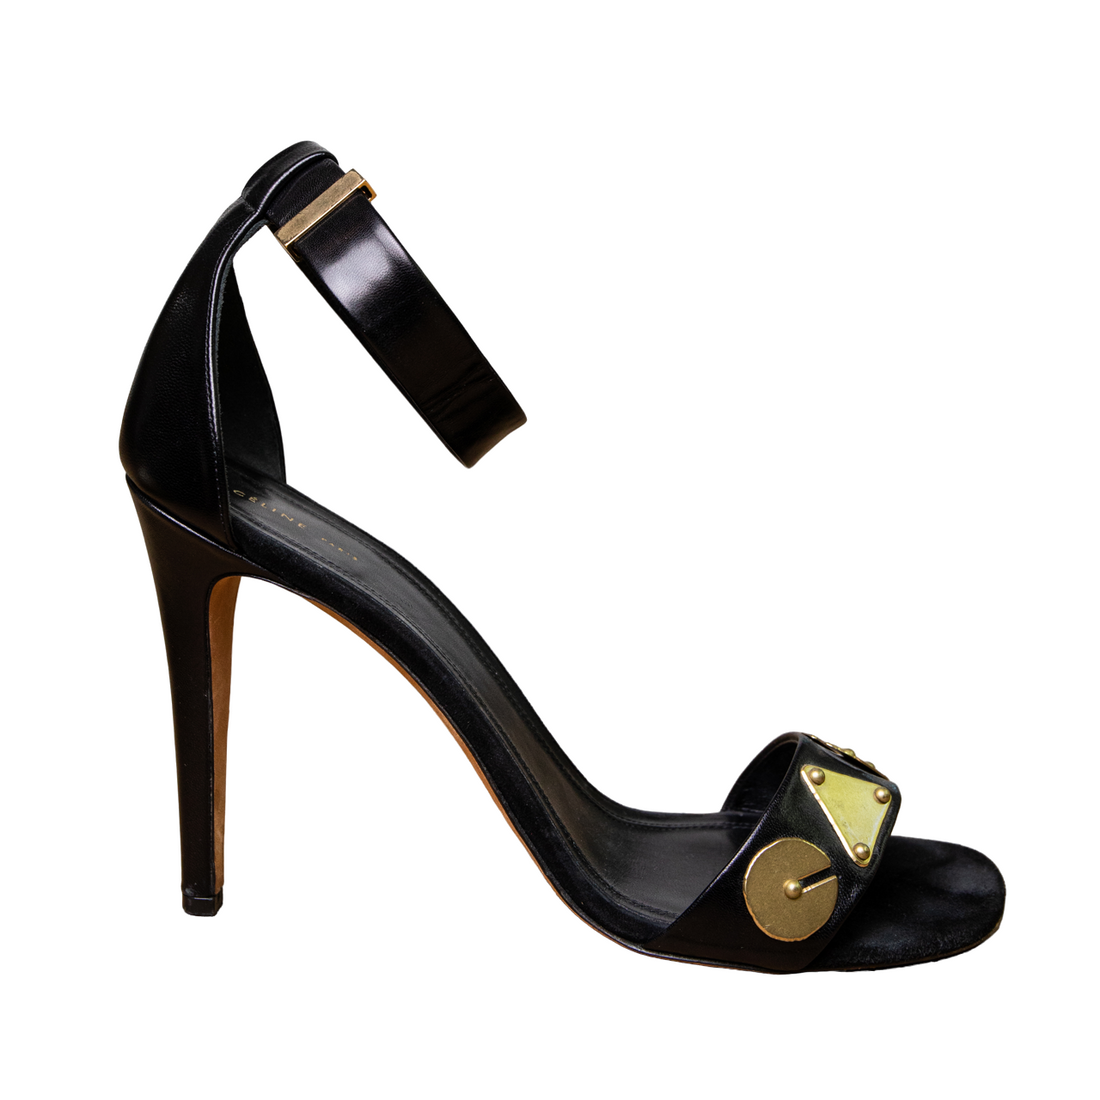 Celine sandals with brass hardware